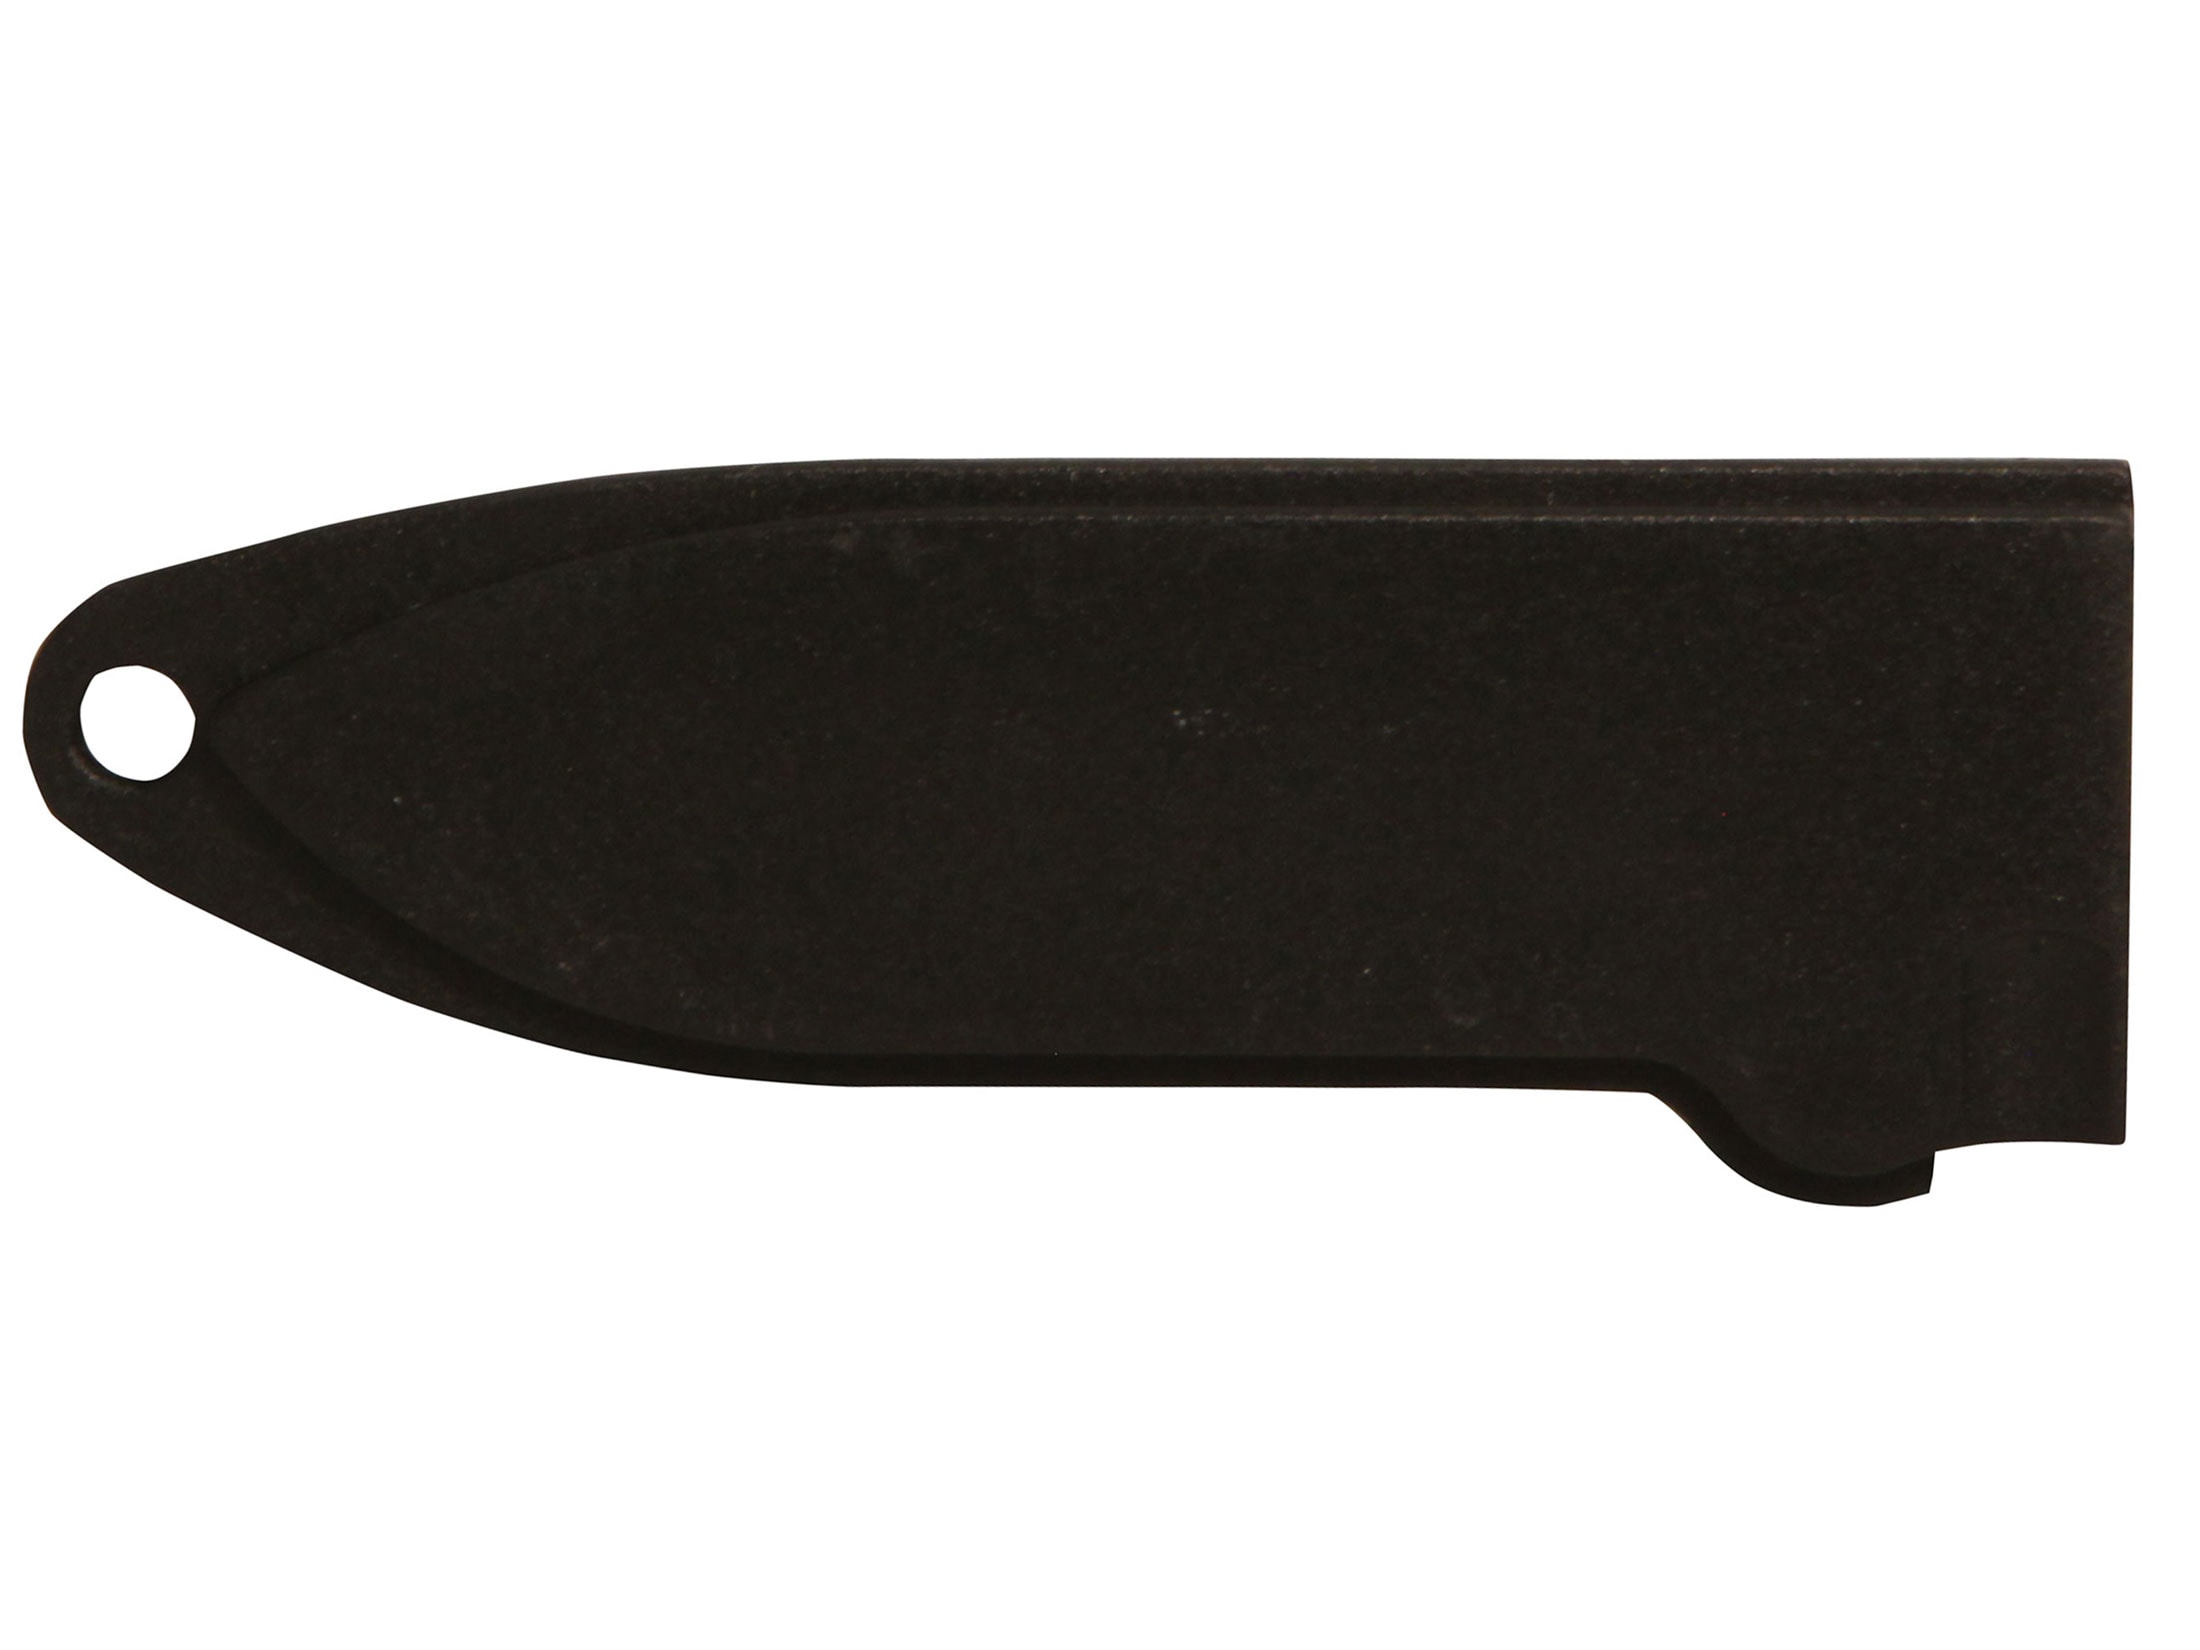 KA-BAR BK13 Becker Remora Fixed Blade Knife 2.25″ Drop Point 1095 Cro-Van Steel Blade Skeleton Handle For Sale